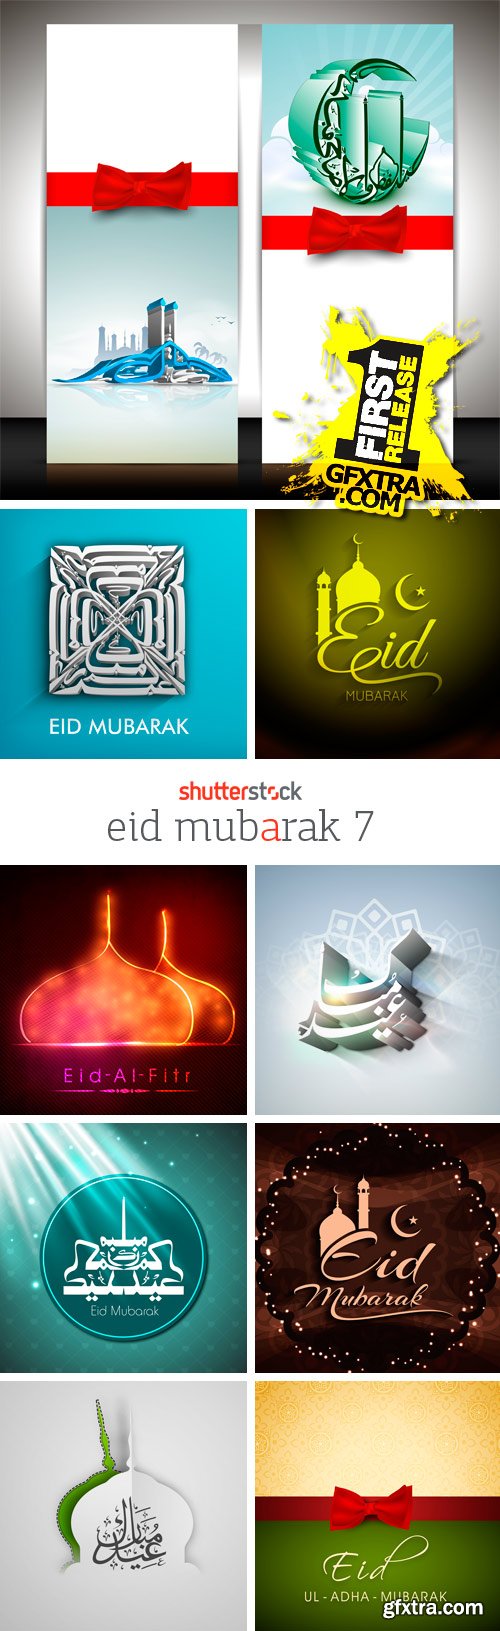 Eid Mubarak 7, 25xEPS